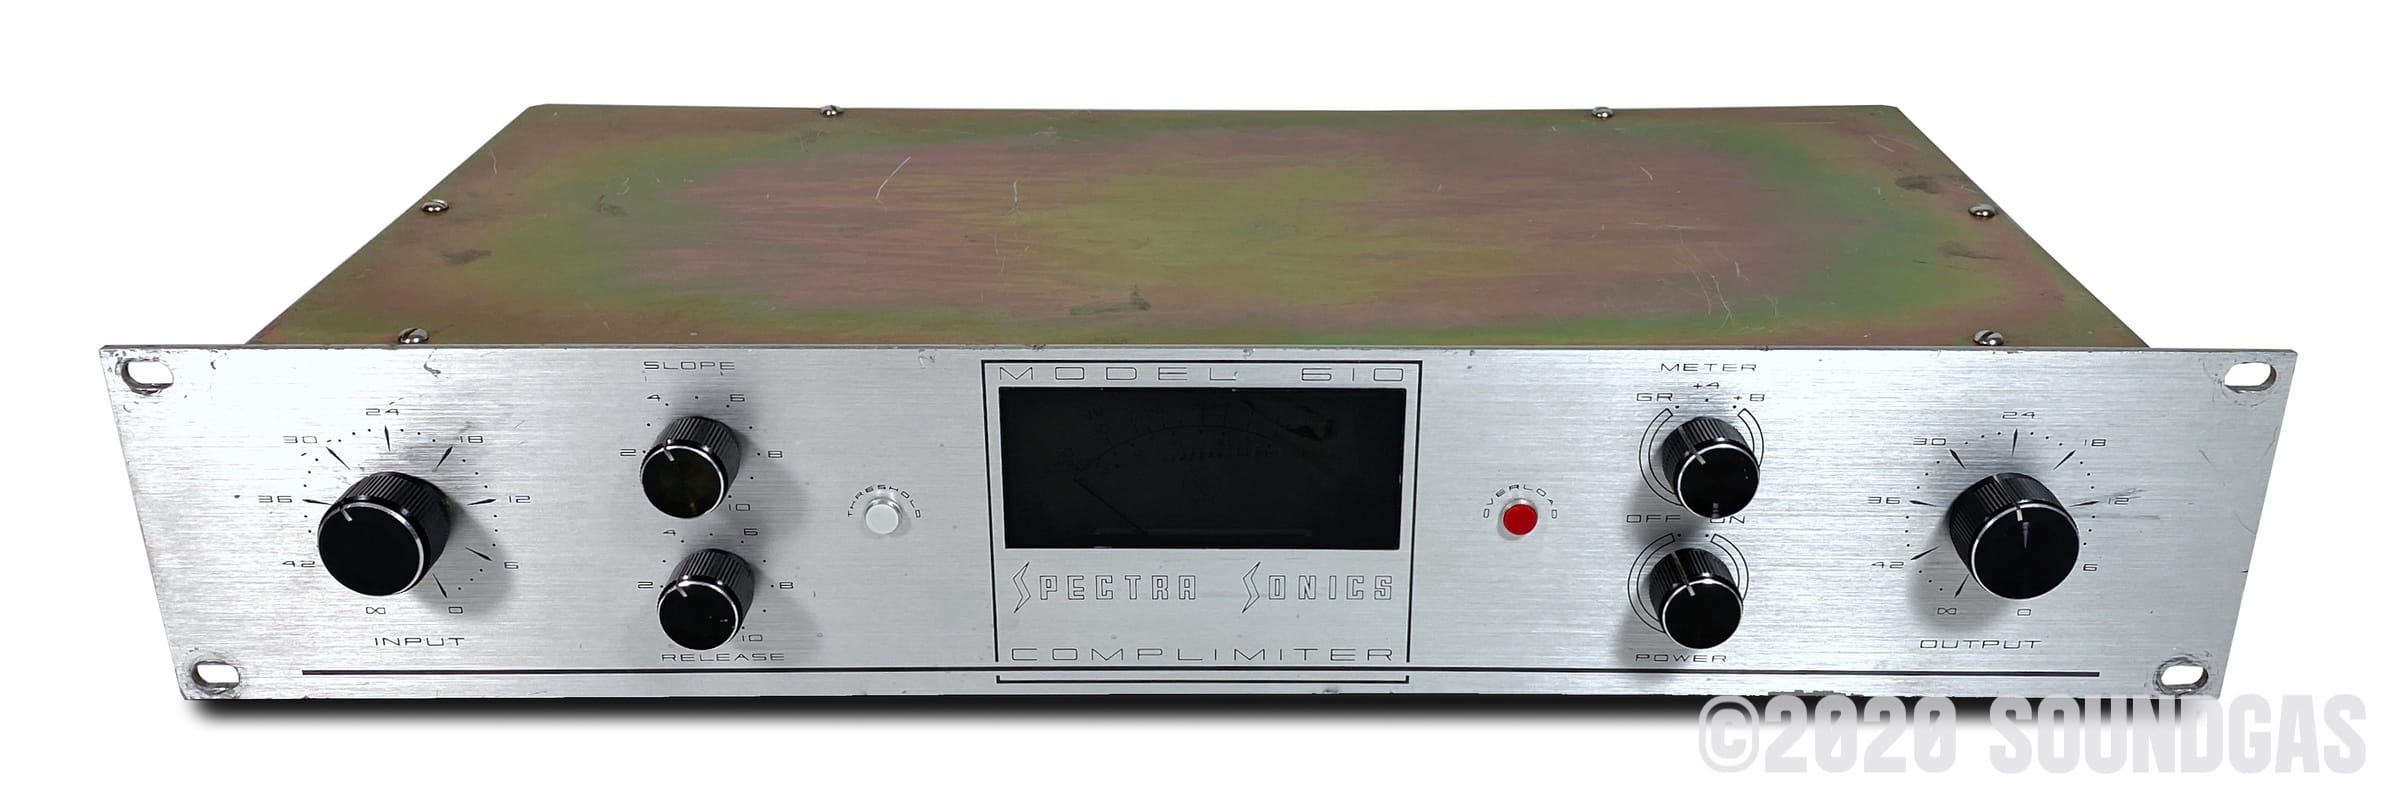 Spectra Sonics Model 610 Complimiter (Original) FOR SALE - Soundgas